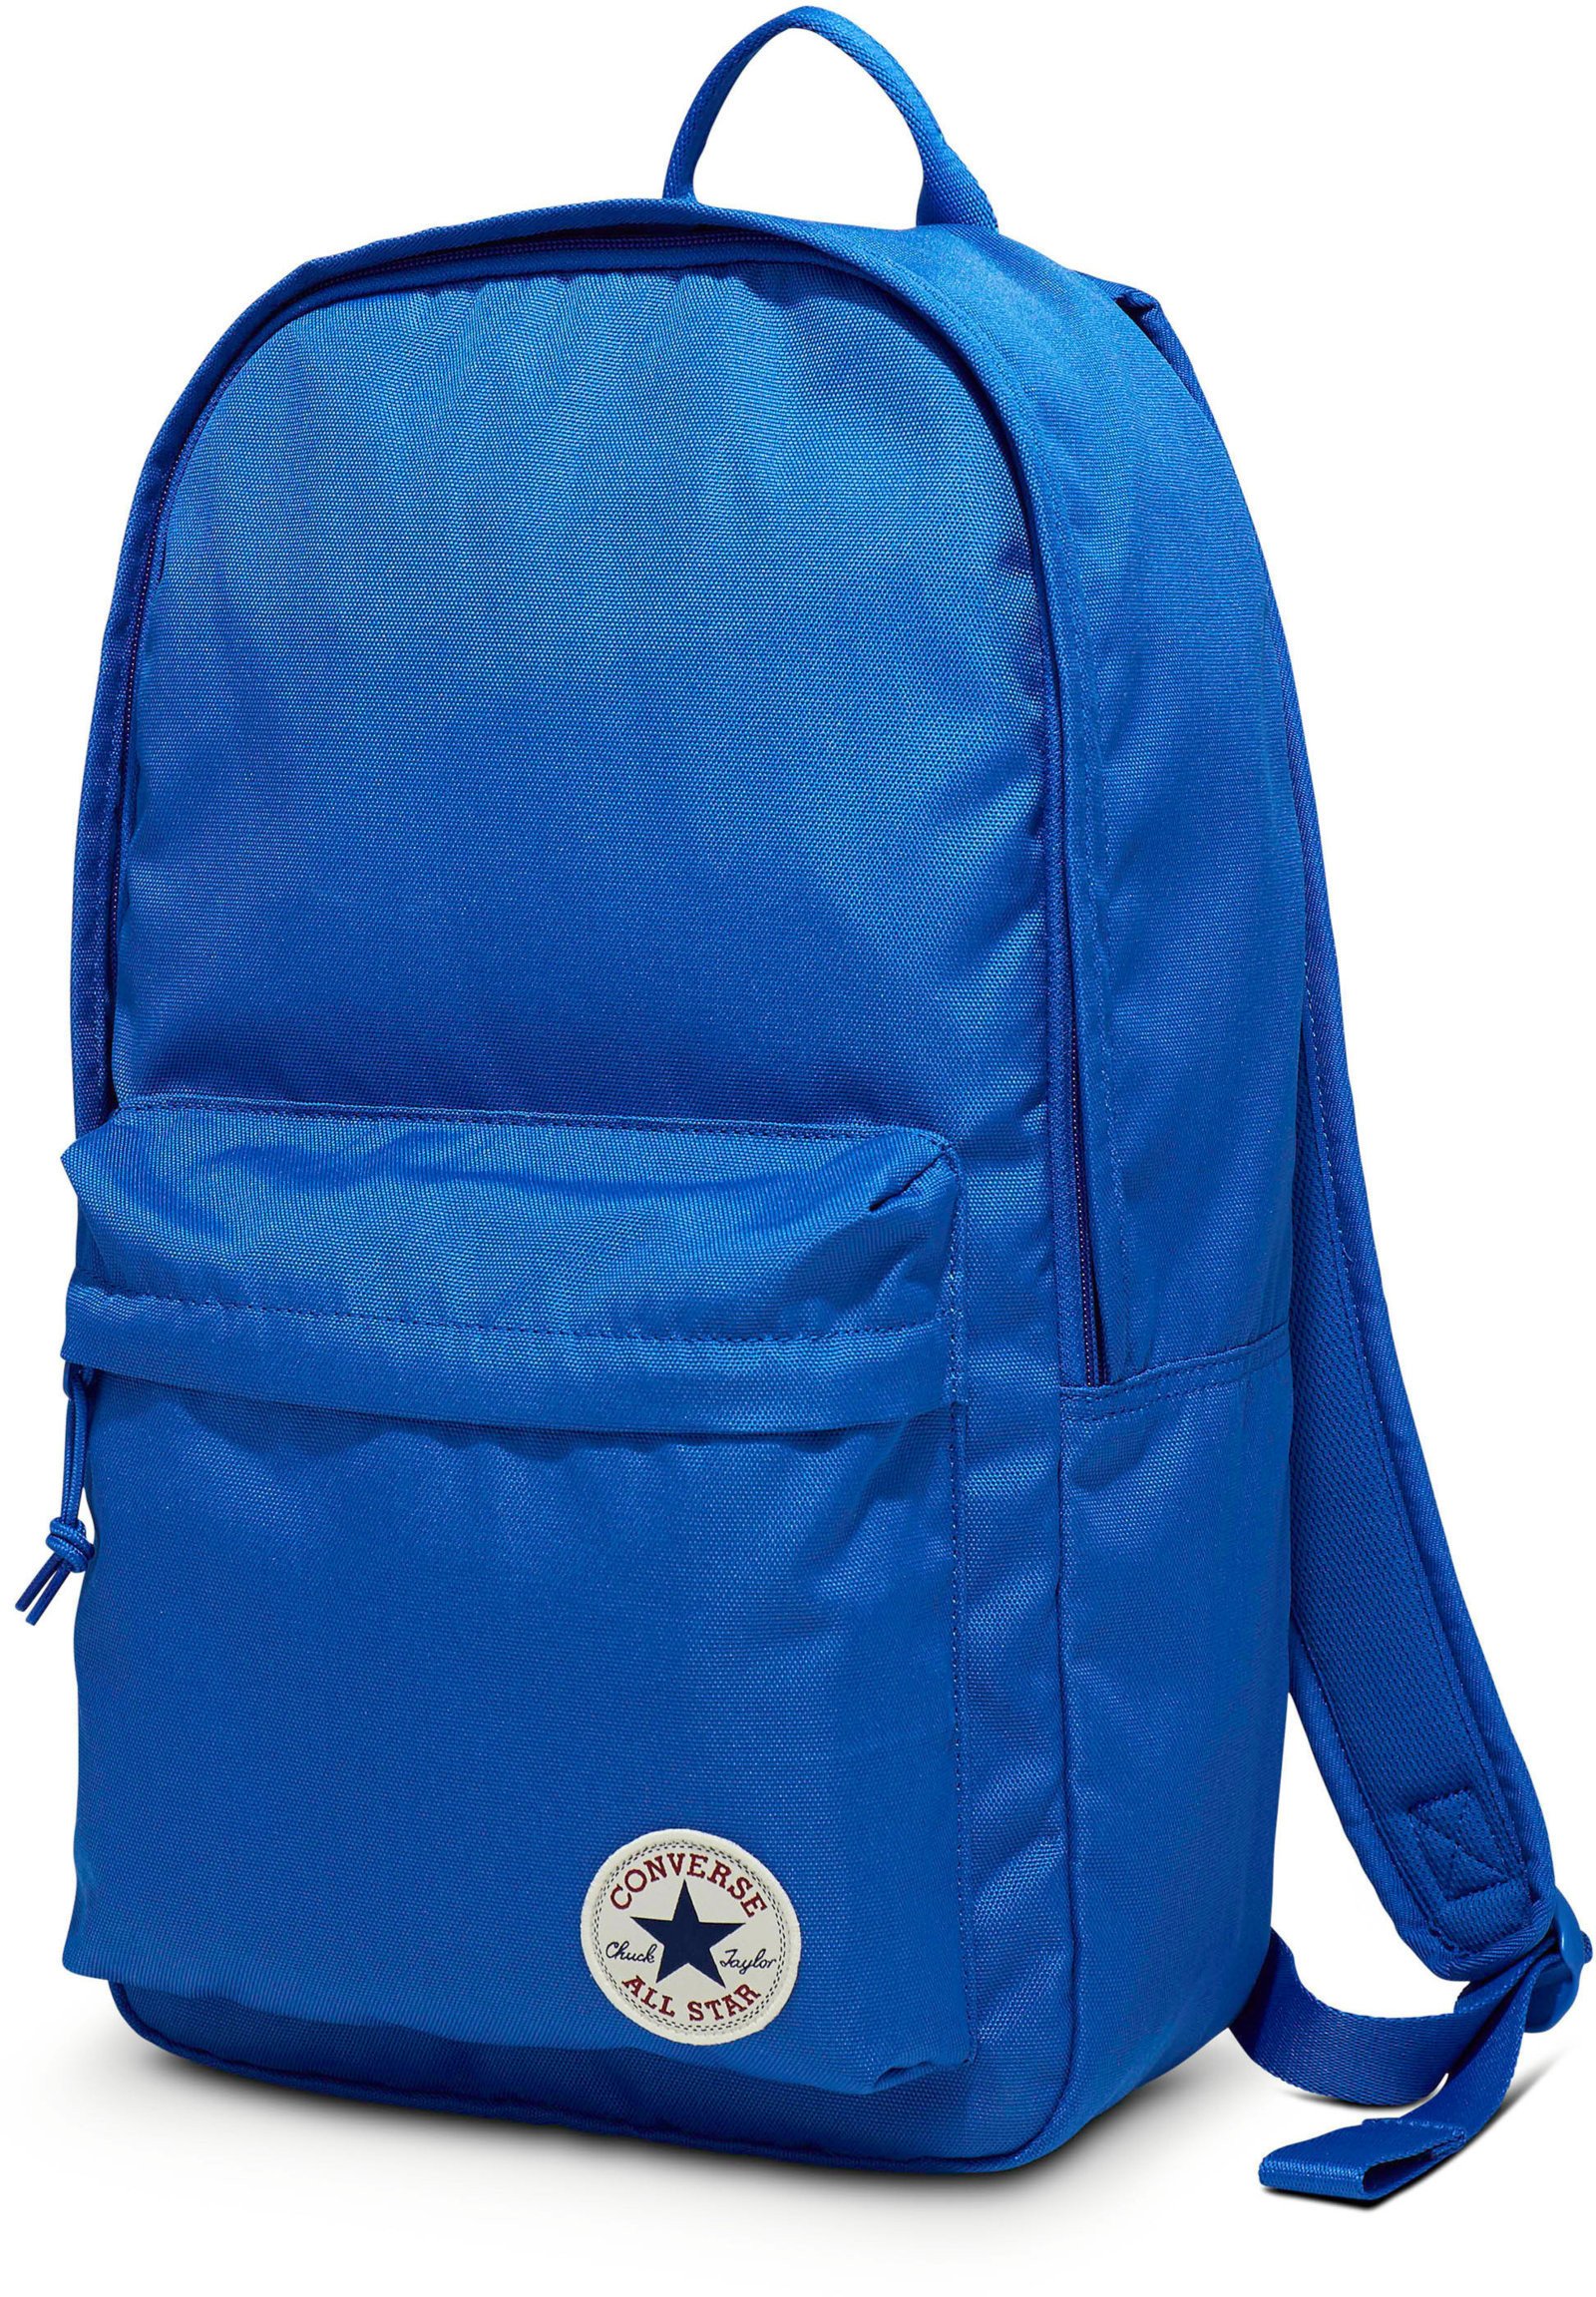 Converse All Star Core Backpack Rucksack Bag - Black, Blue, Grey ...